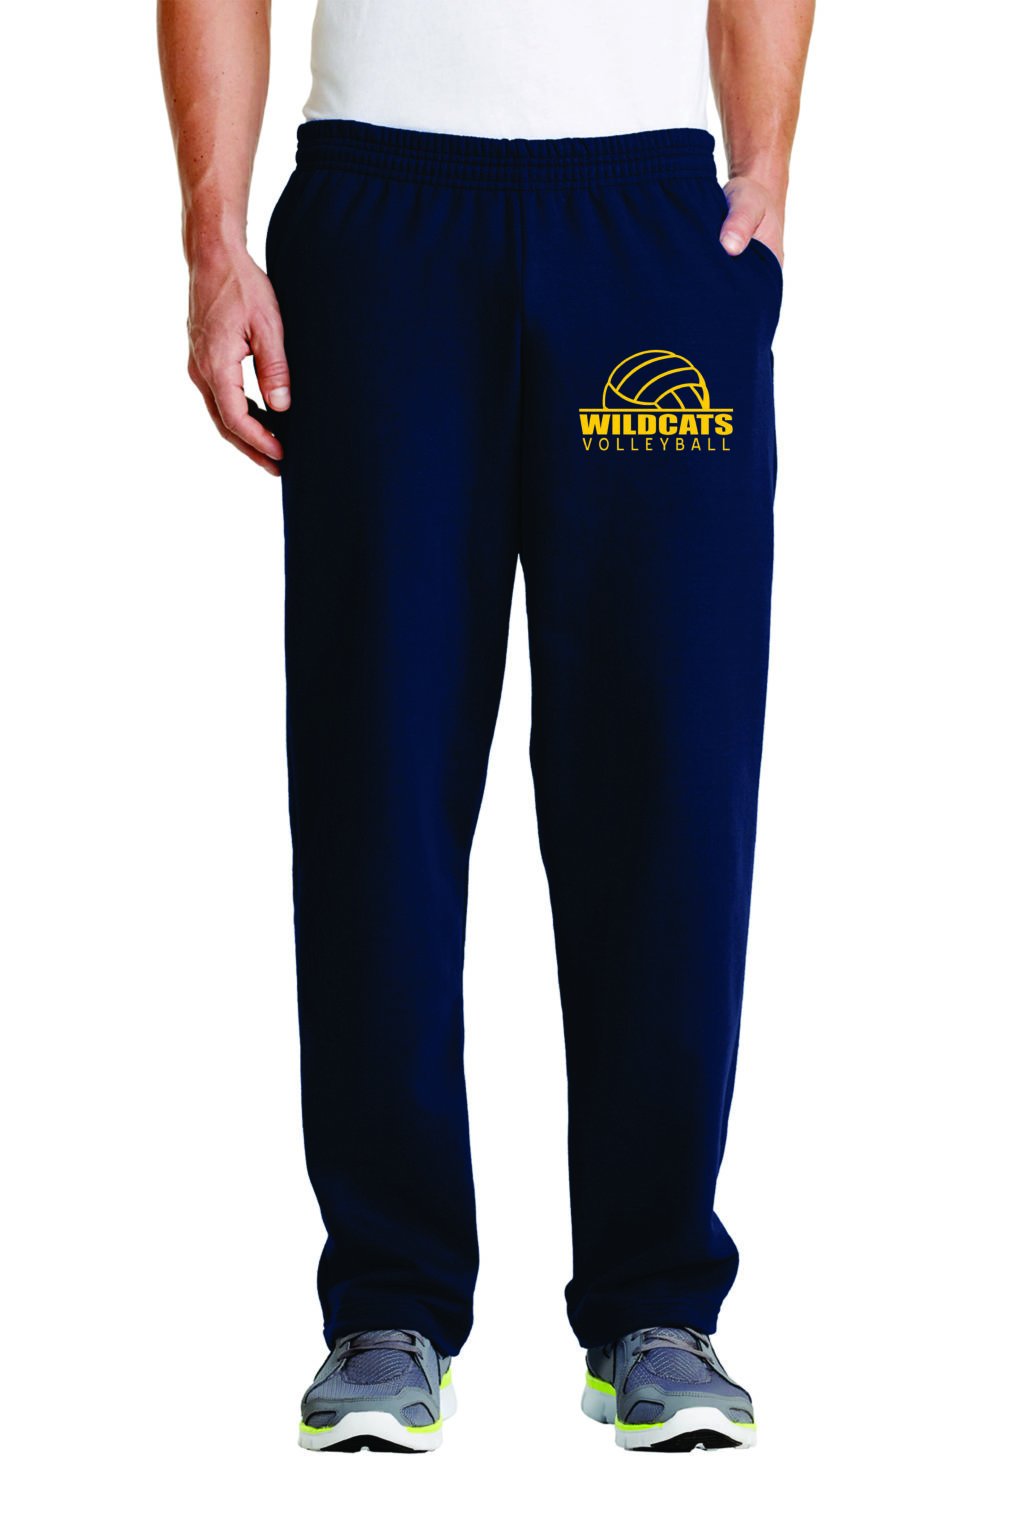 Wildcat Volleyball Open Bottom Pants – Flashions Ltd.